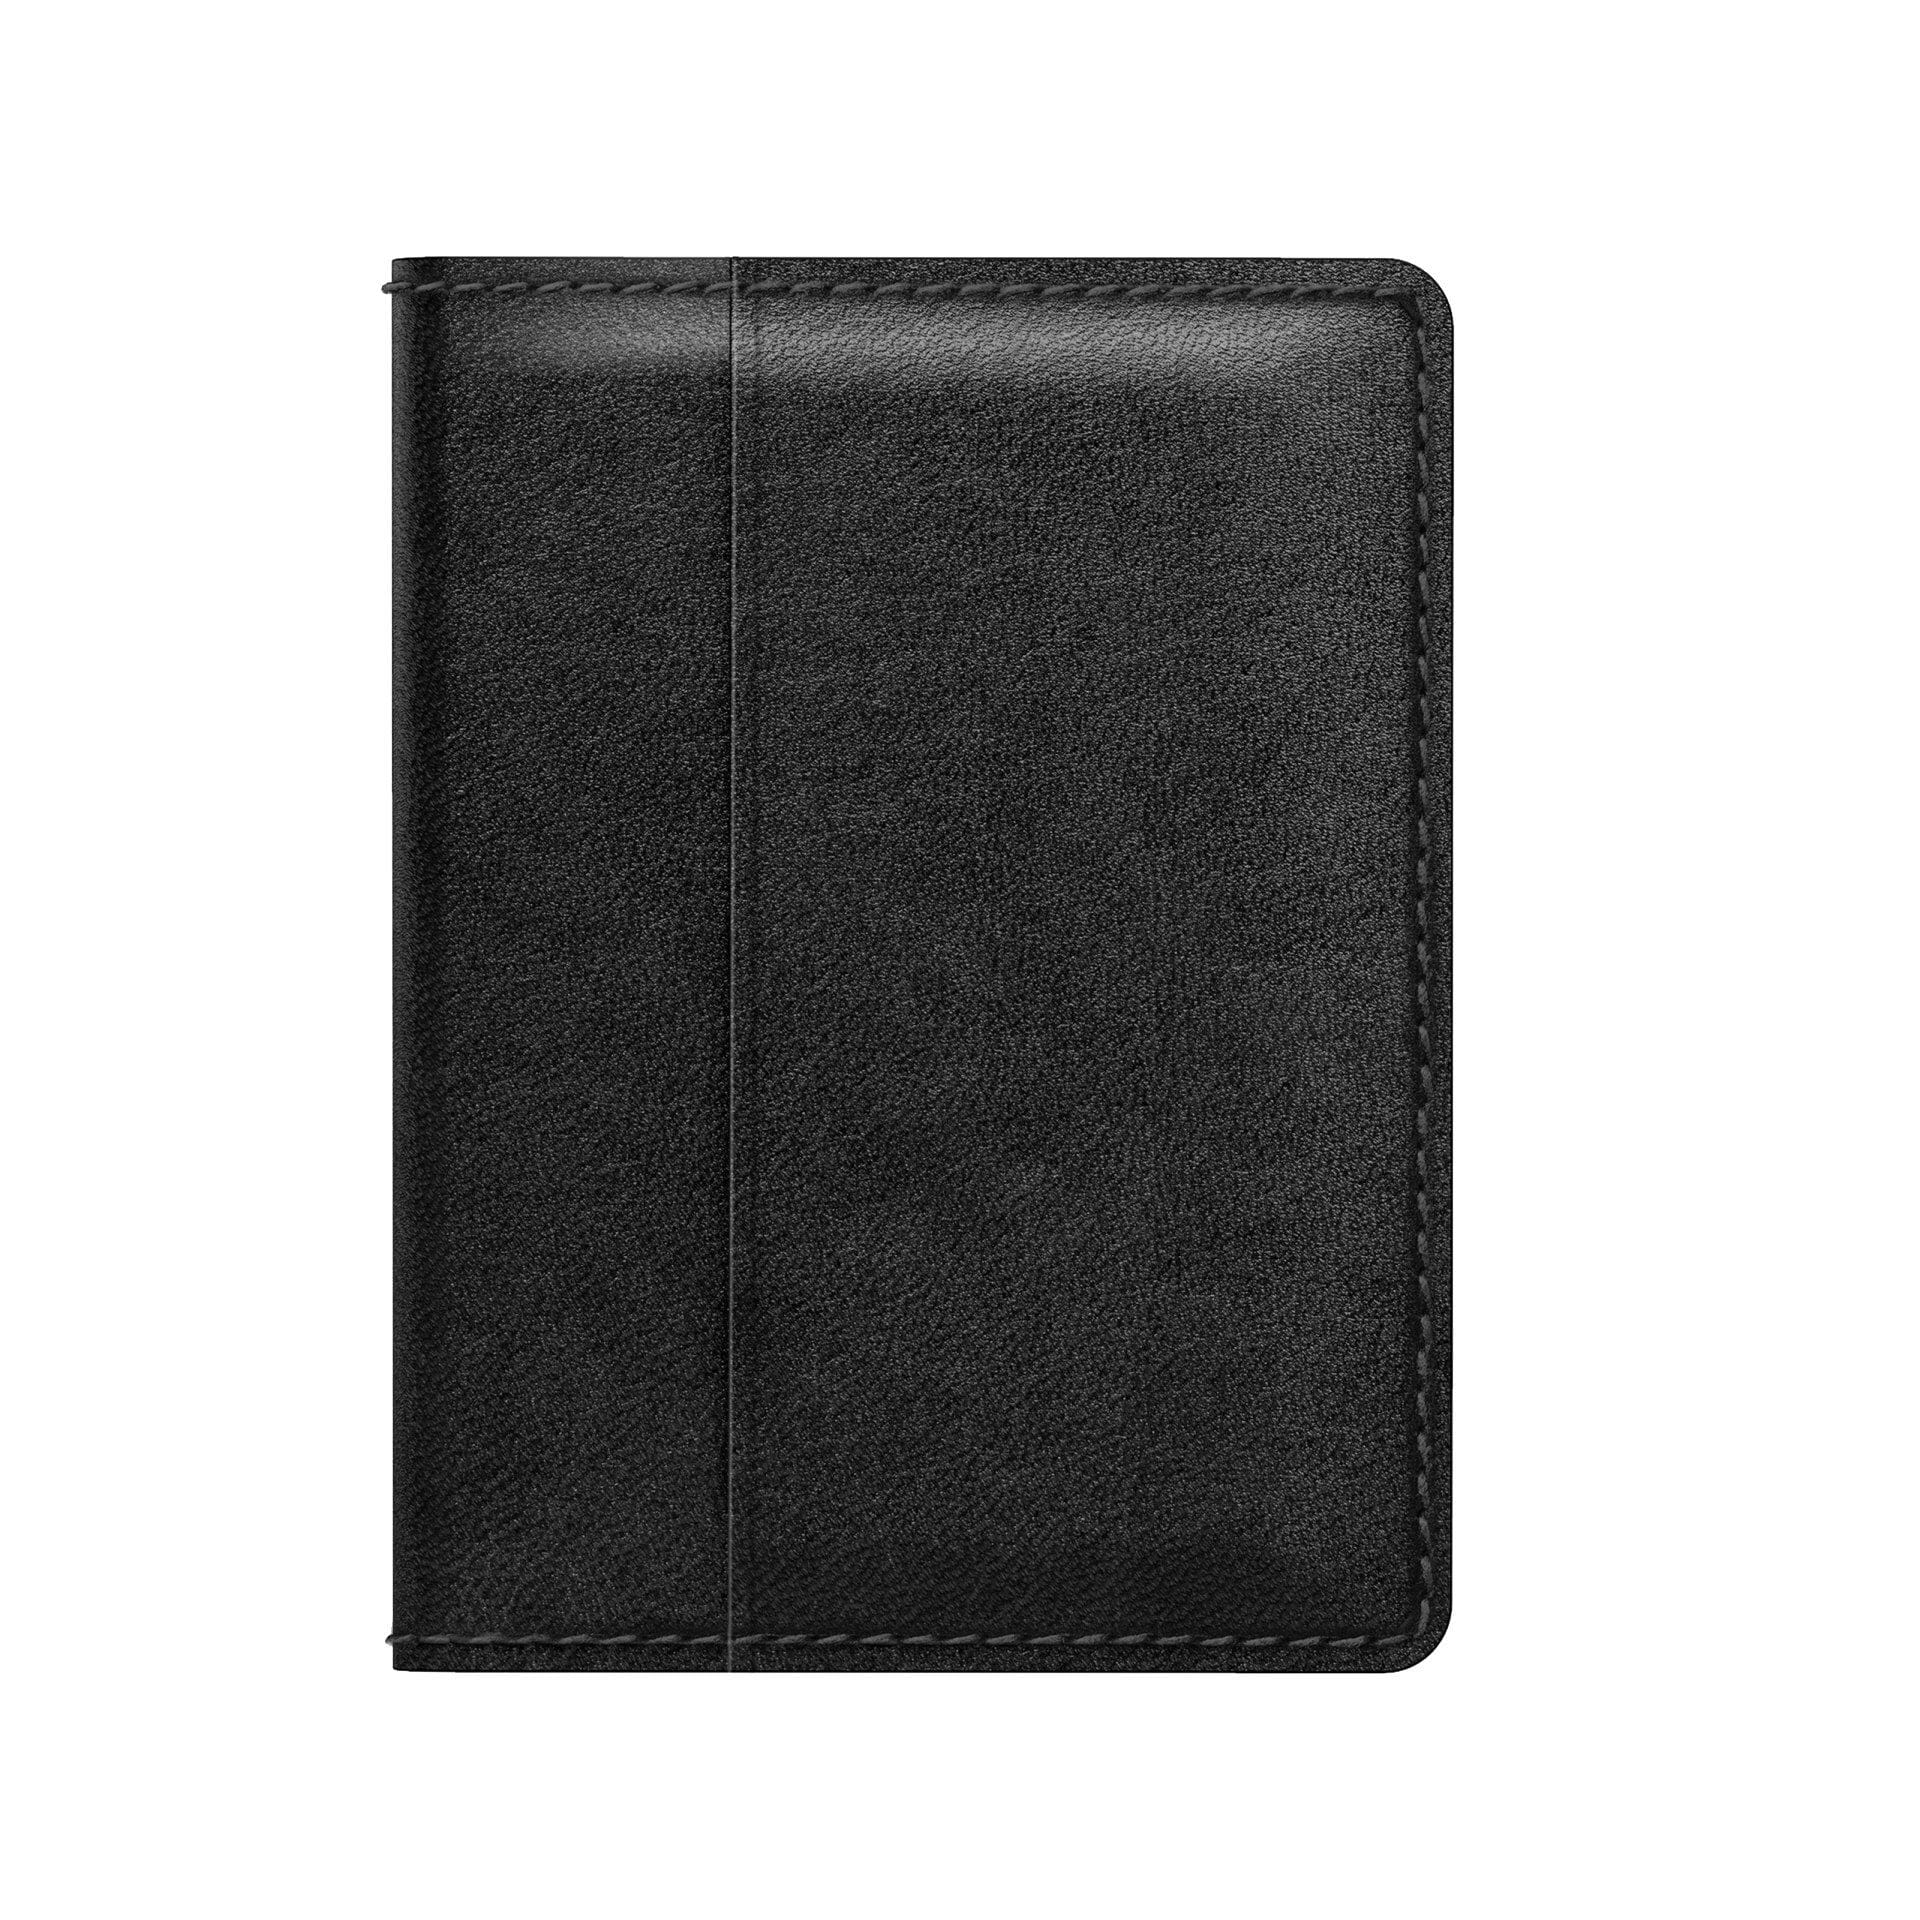 NOMAD Slim Horween Leather Wallet, Rustic Brown, Black Wallet NOMAD 